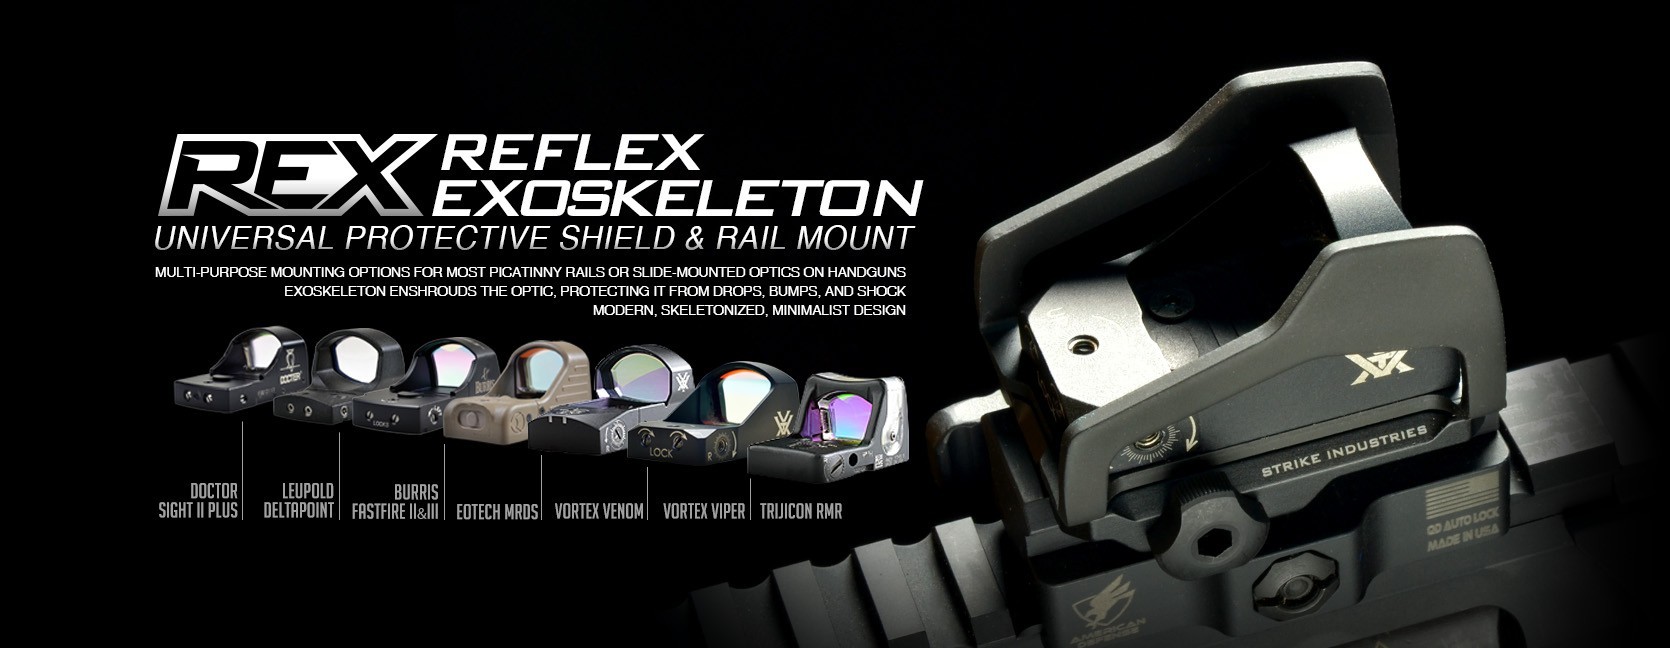 Strike Industries REX Reflex Exoskeleton | Redcon1 Tactical